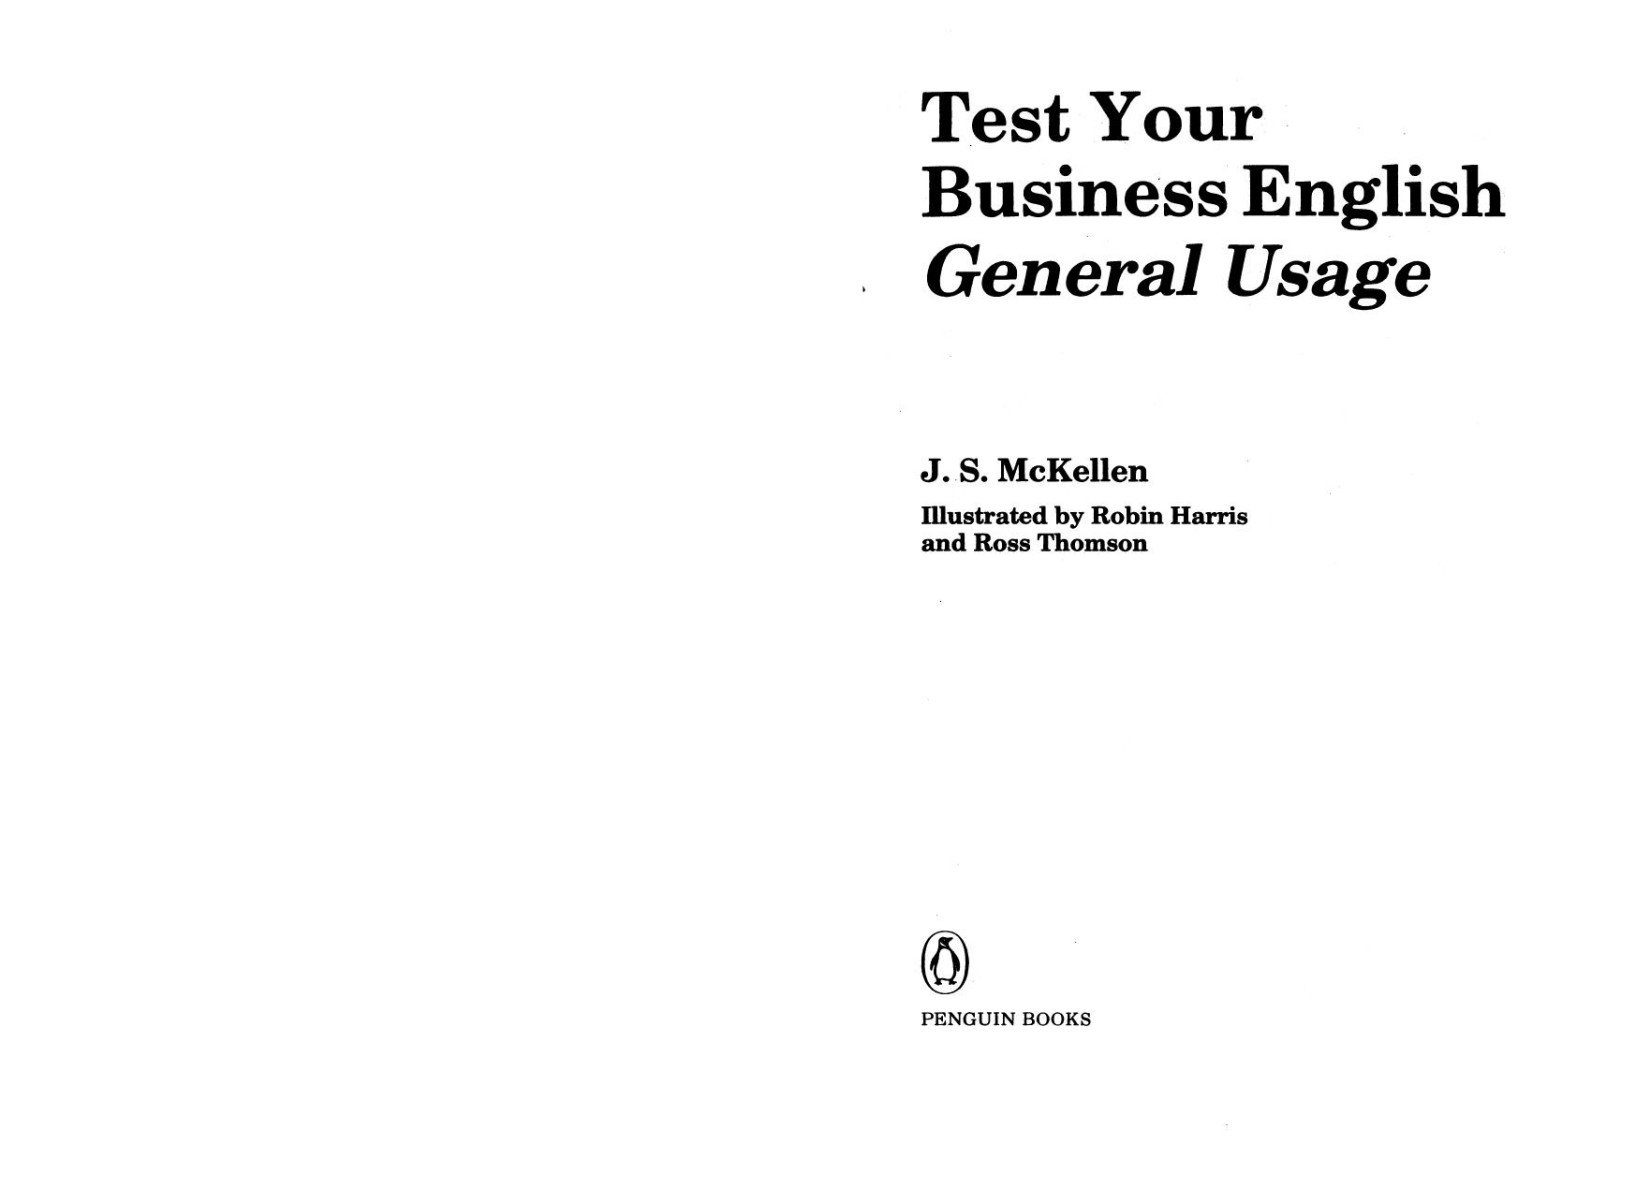 Test Your Business English  General Usage-Penguin Books Ltd 1997